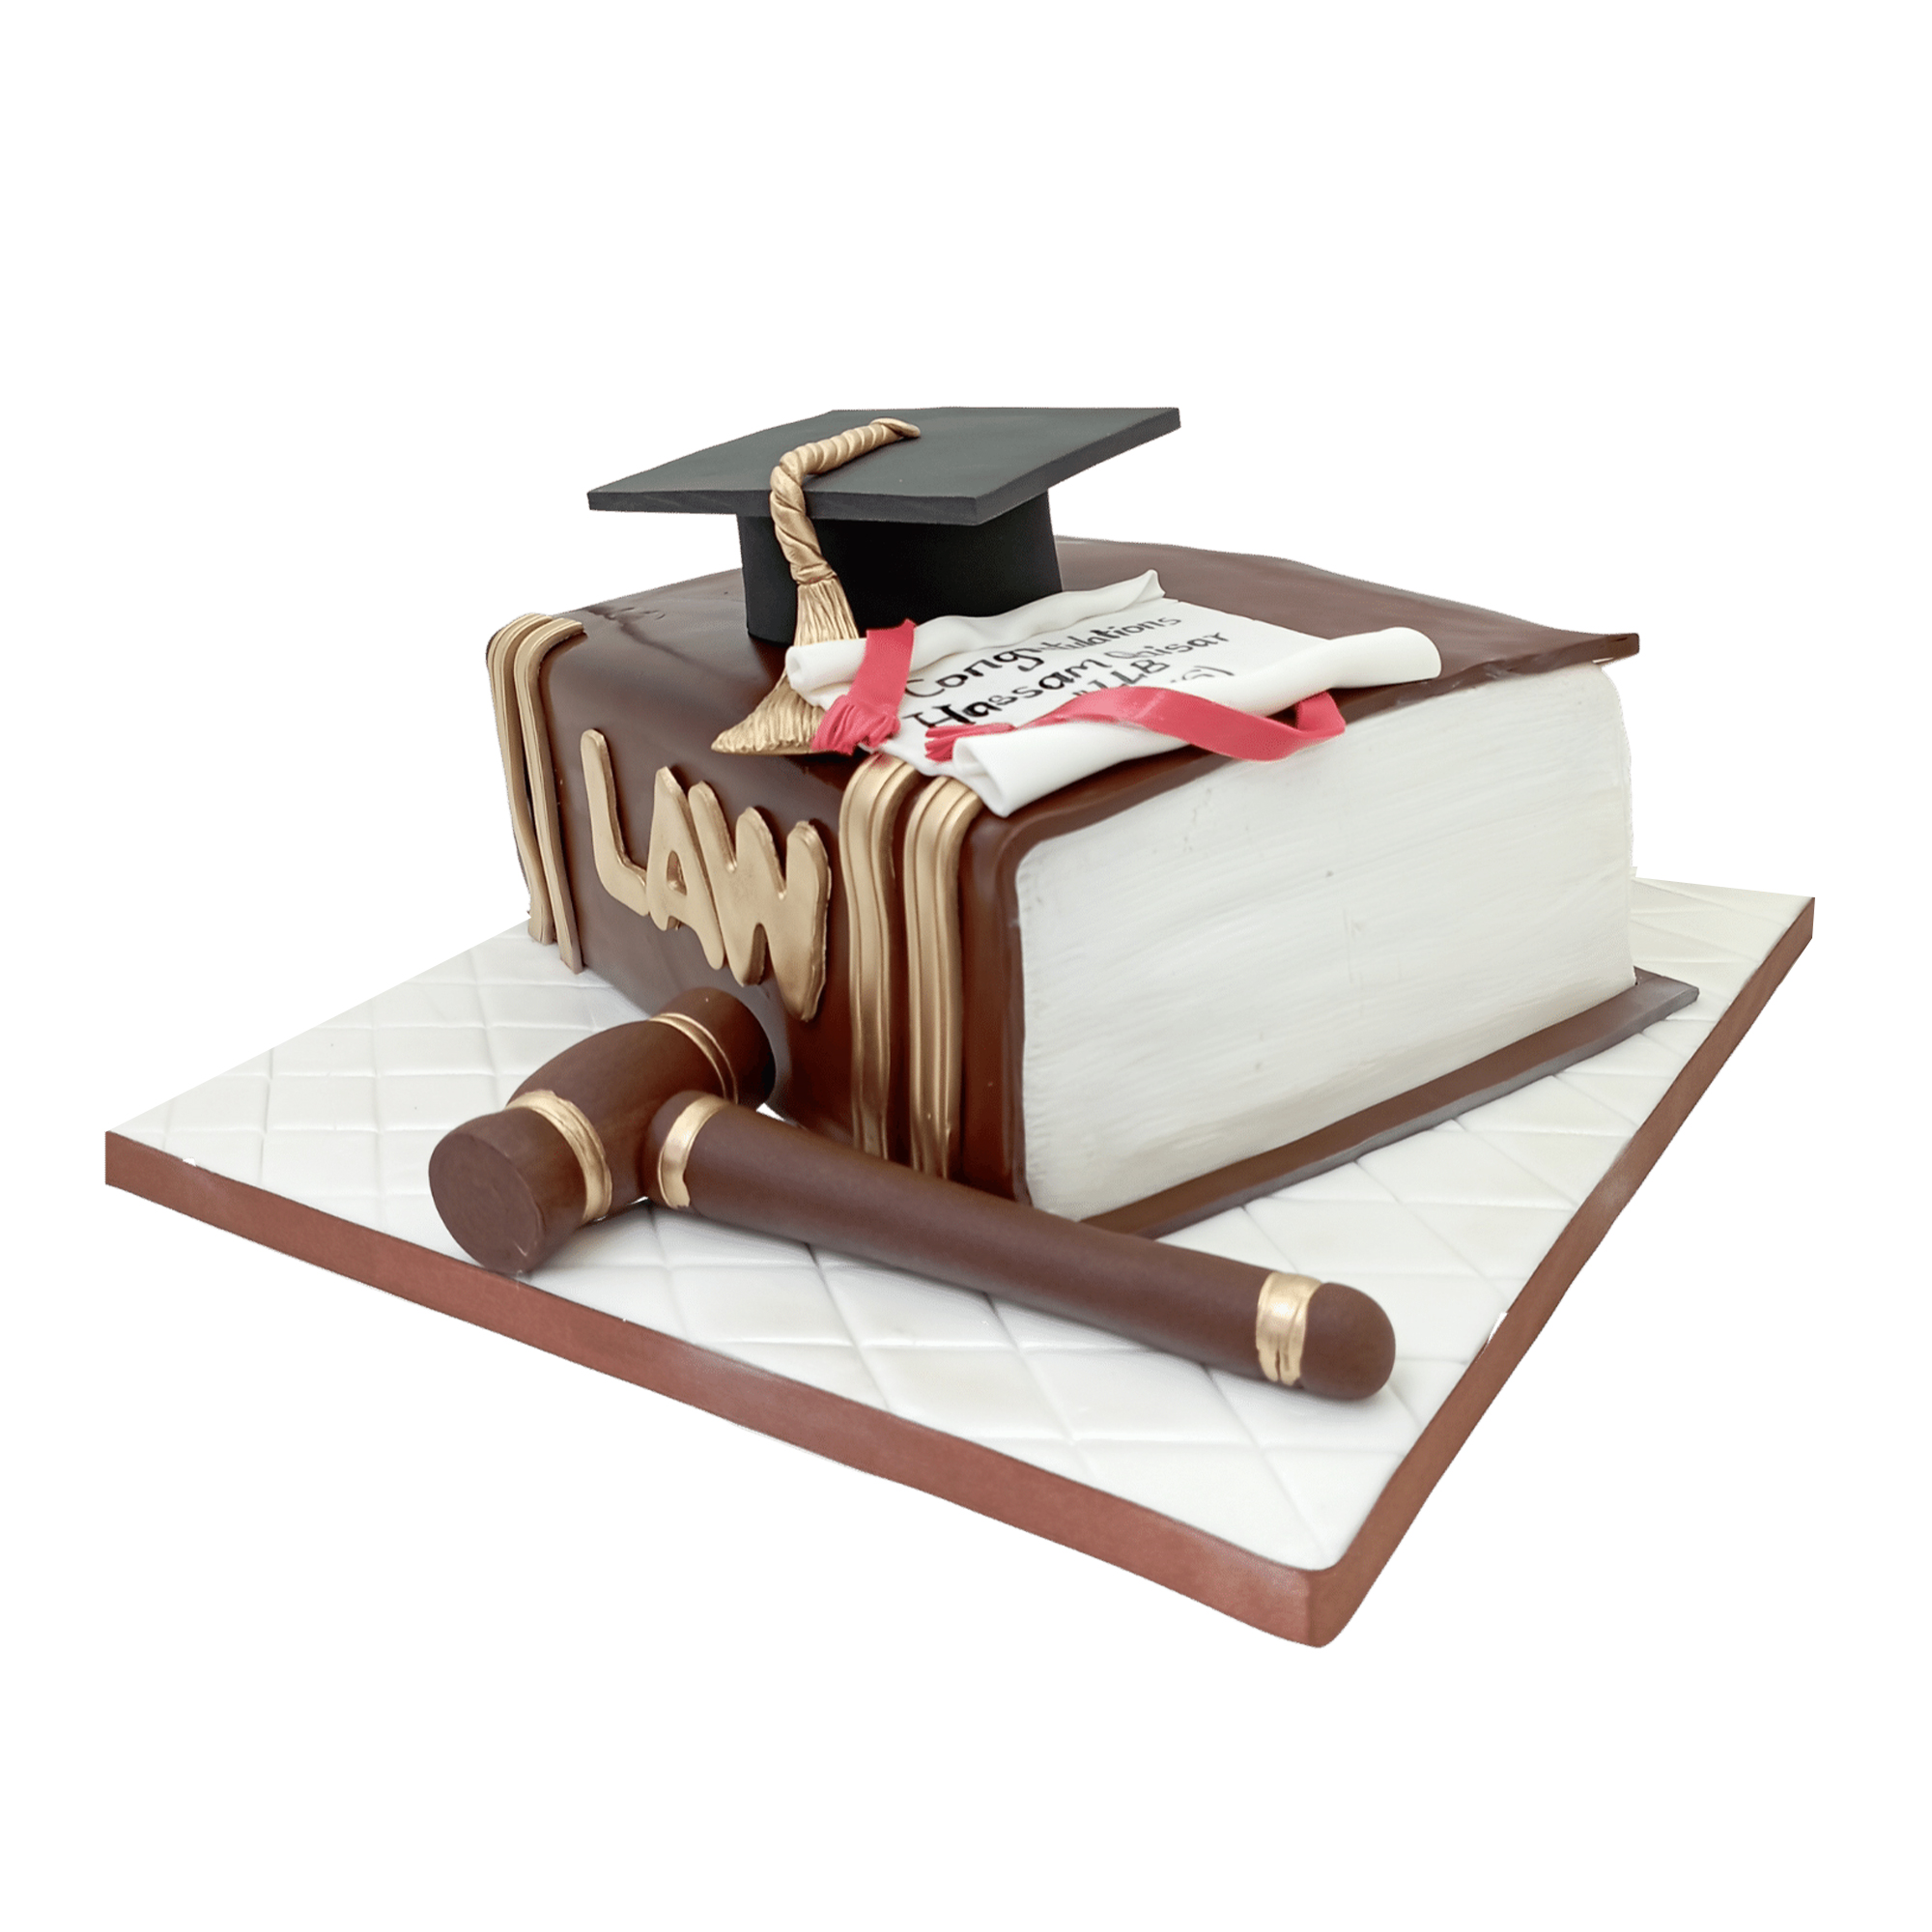 Graduation cake Law